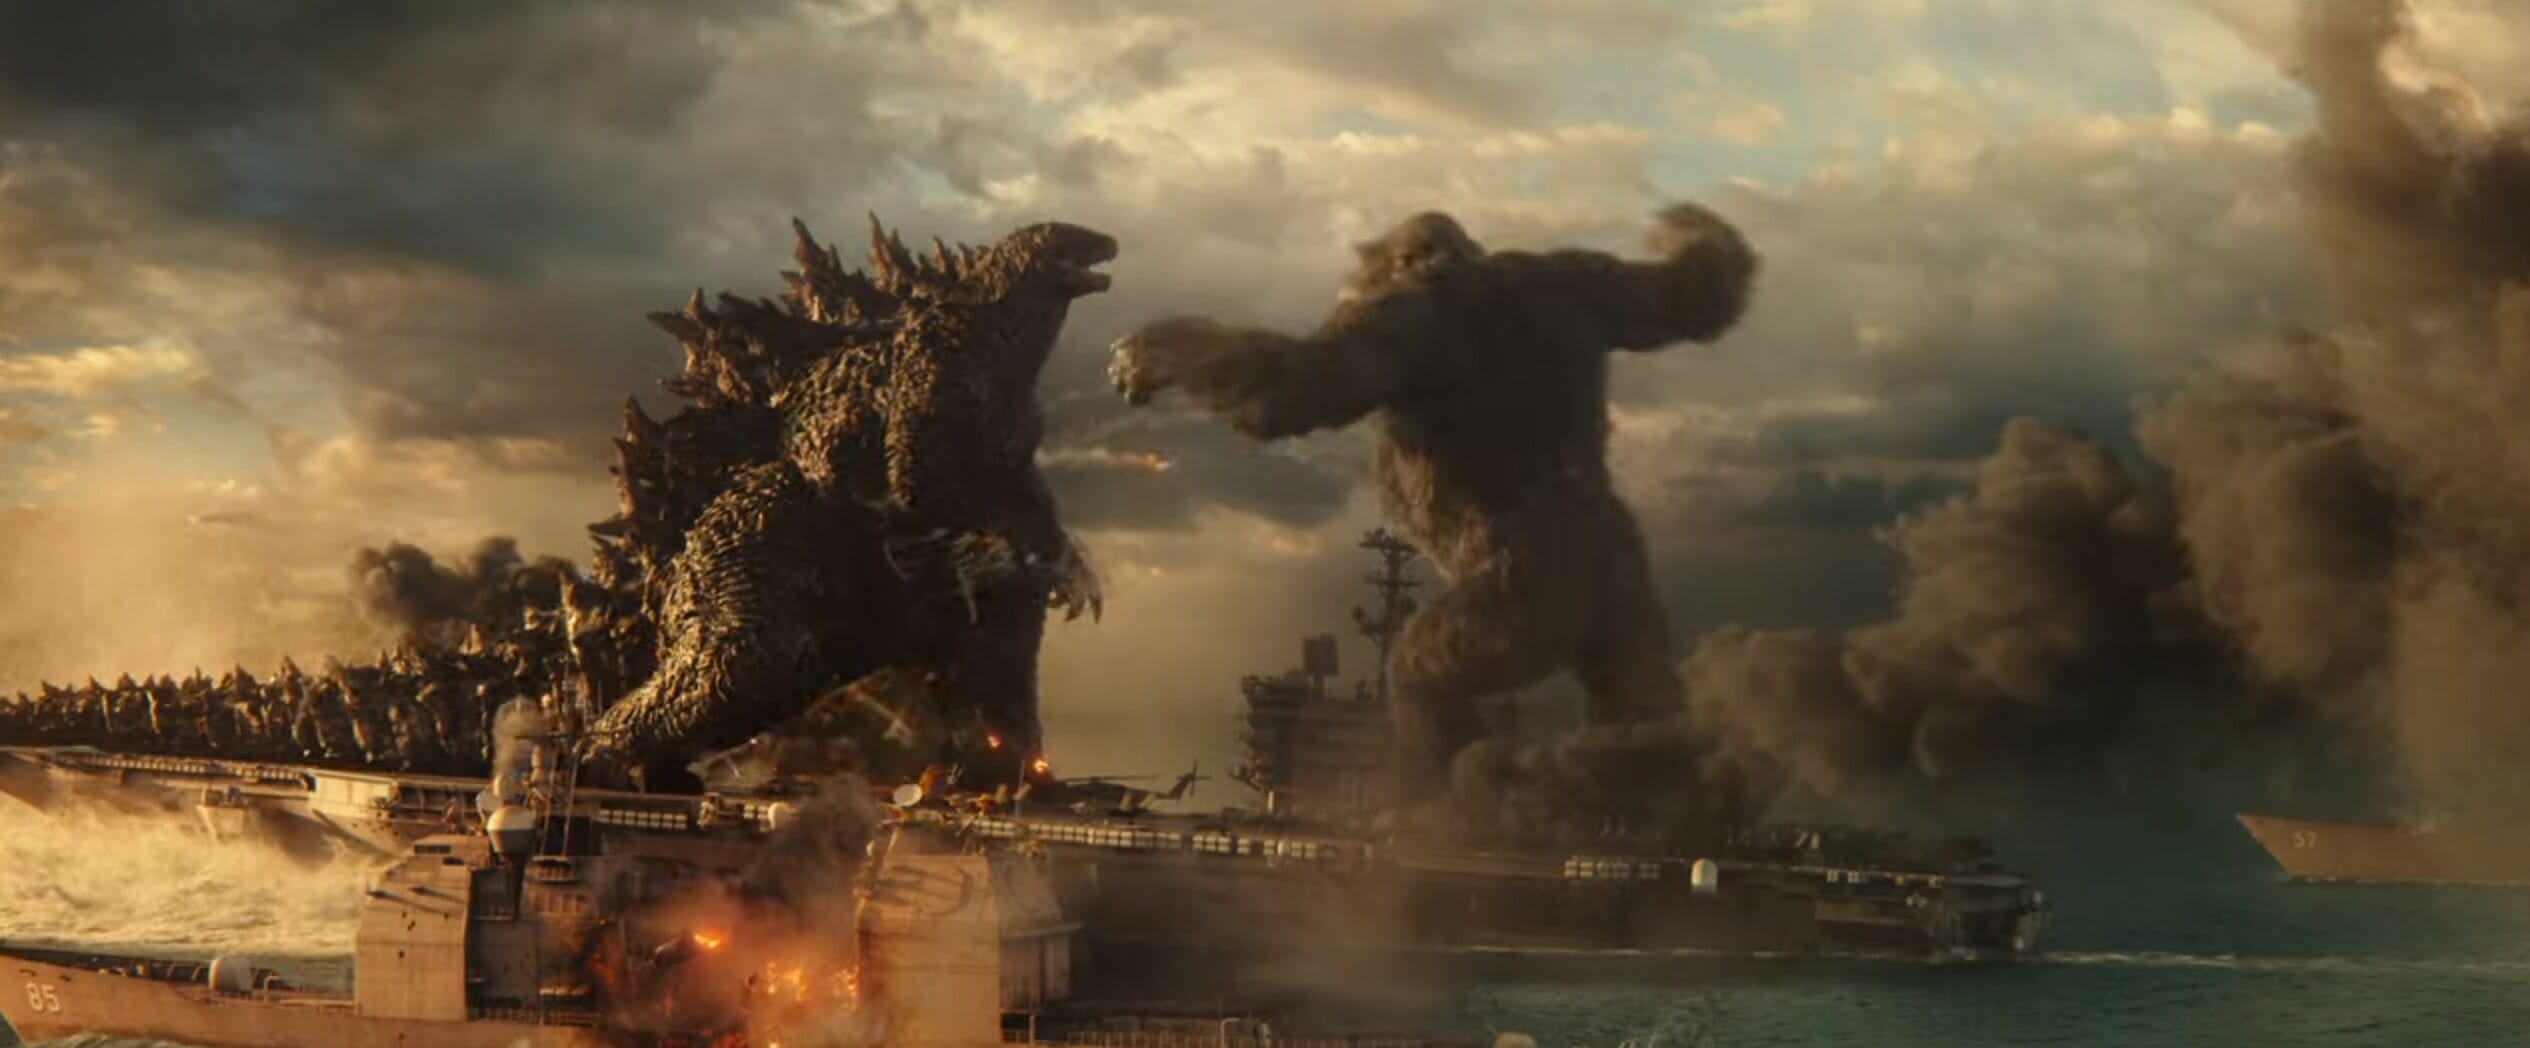 Godzilla vs Kong trailer stirs the internet